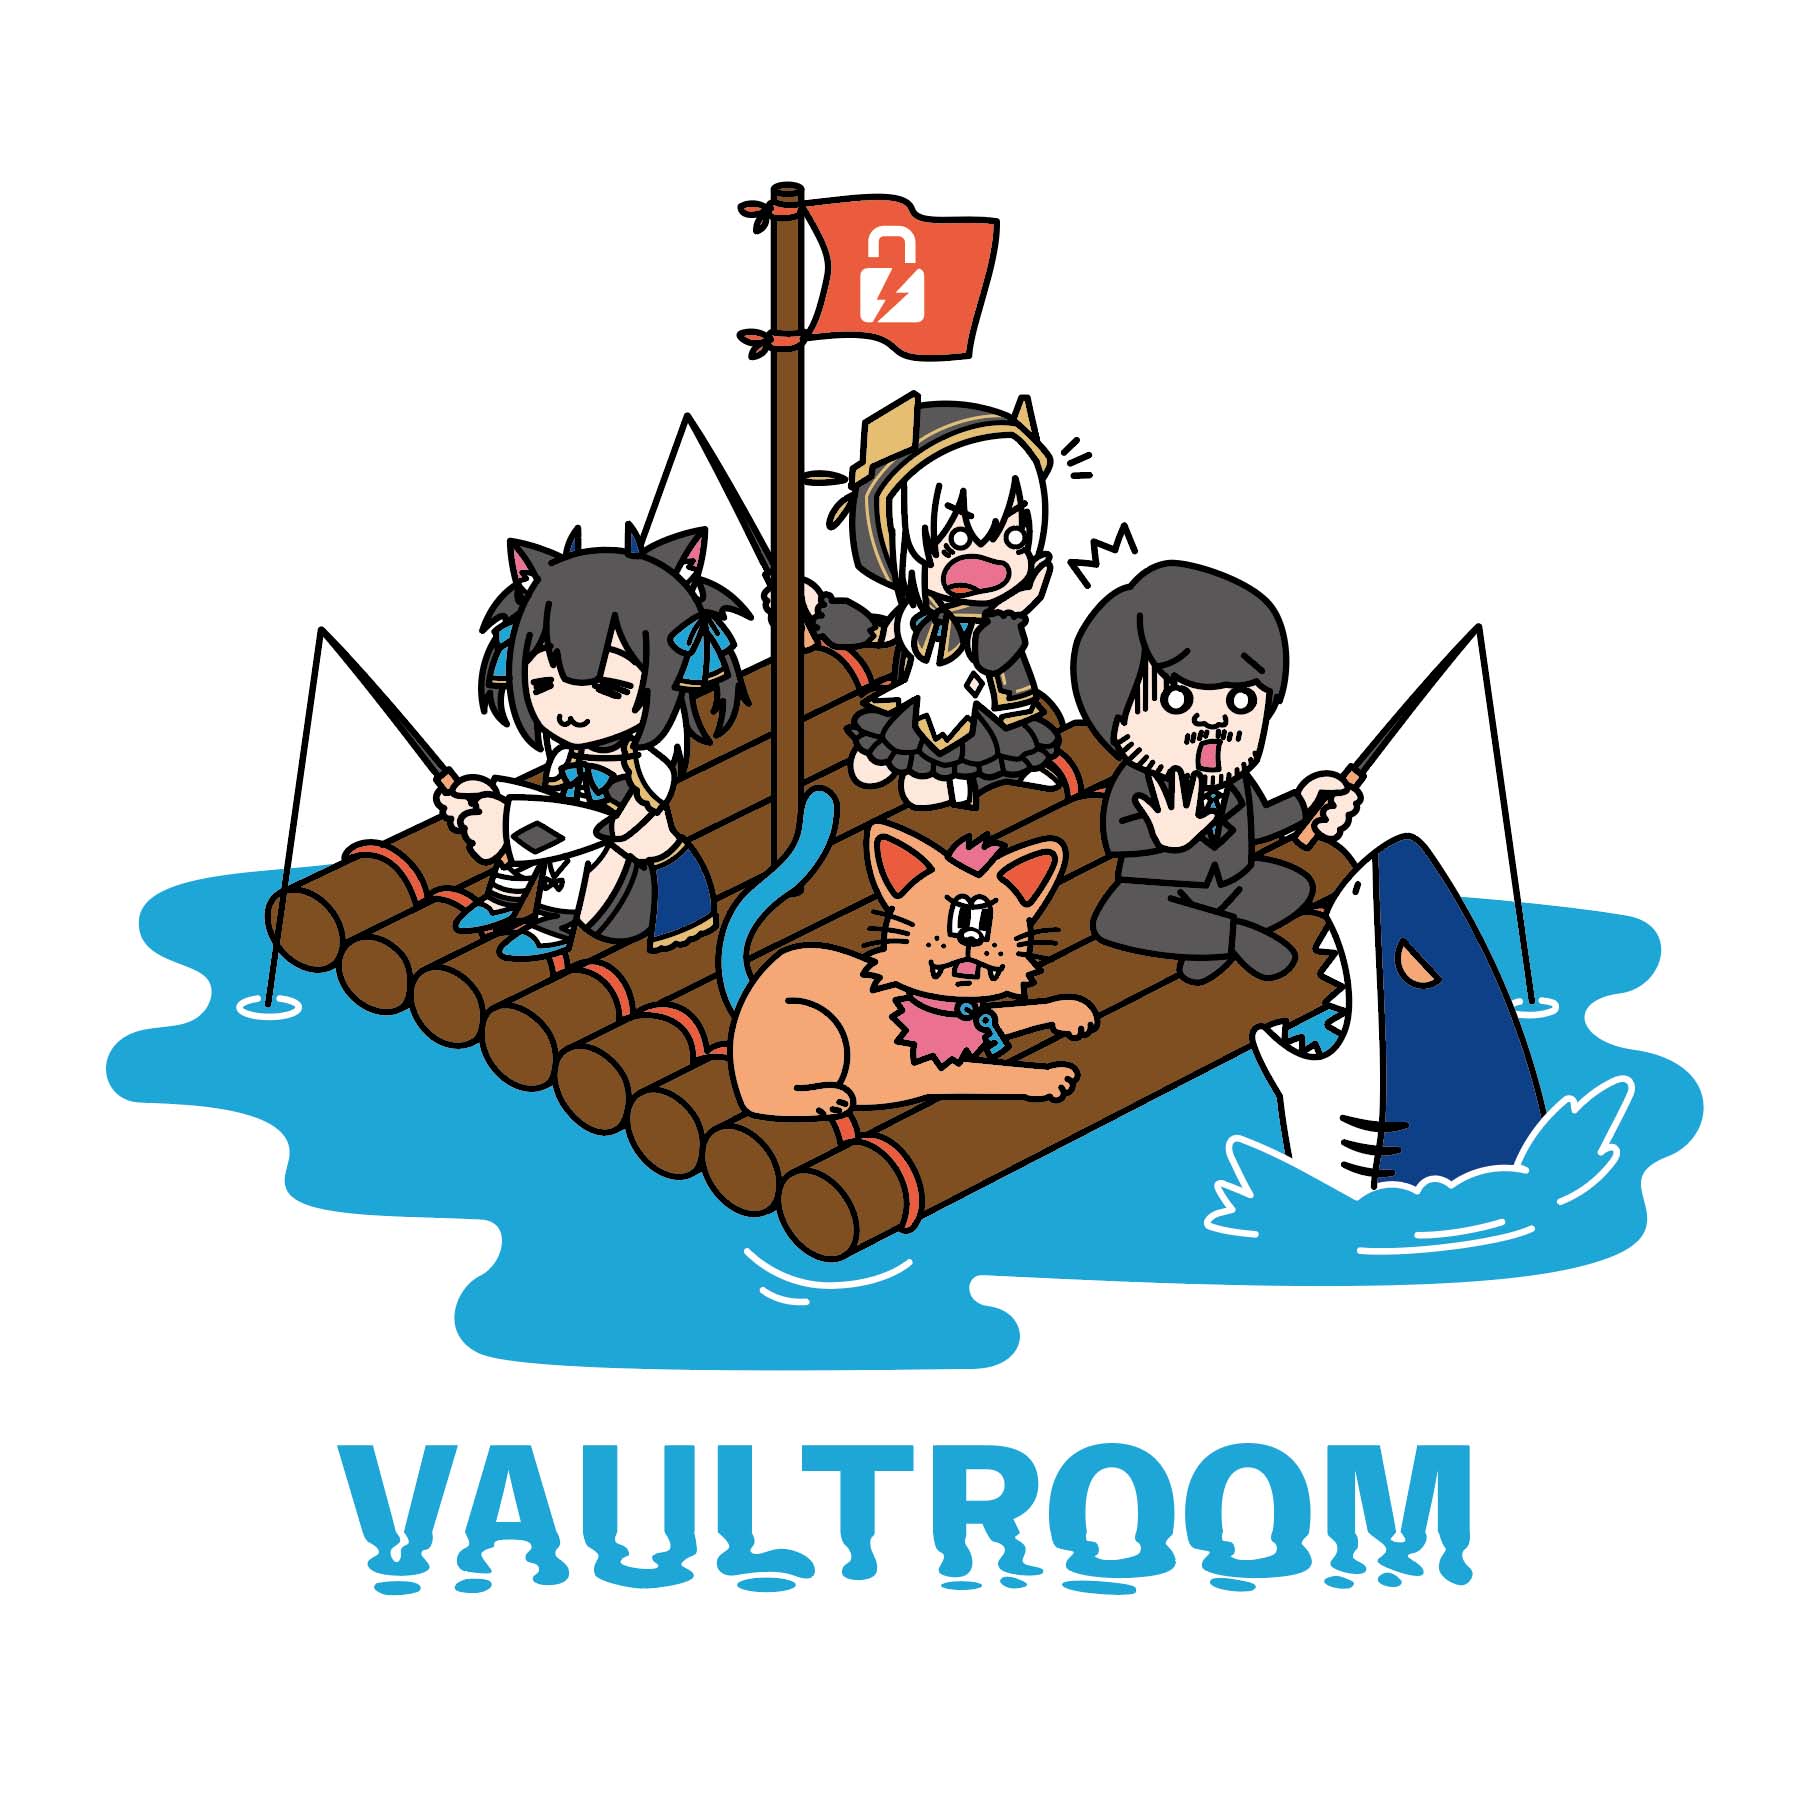 【XL】vaultroom FISHING TEE / BLK